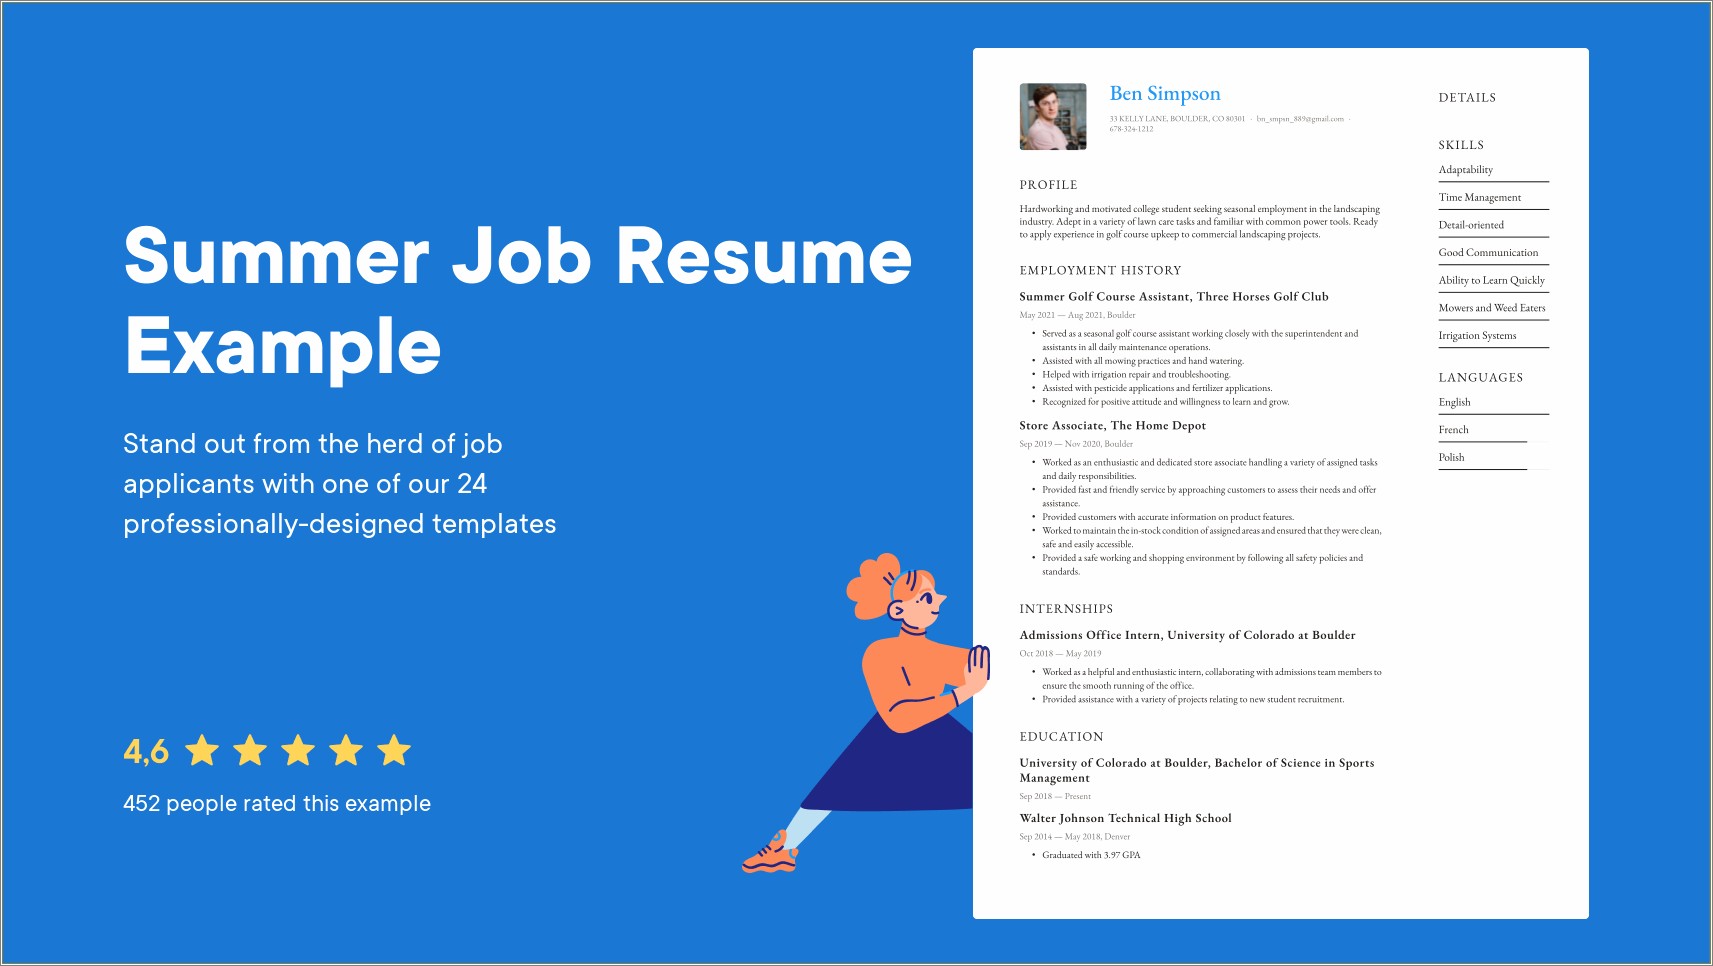 Resume Objectives For Temporary Summer Job